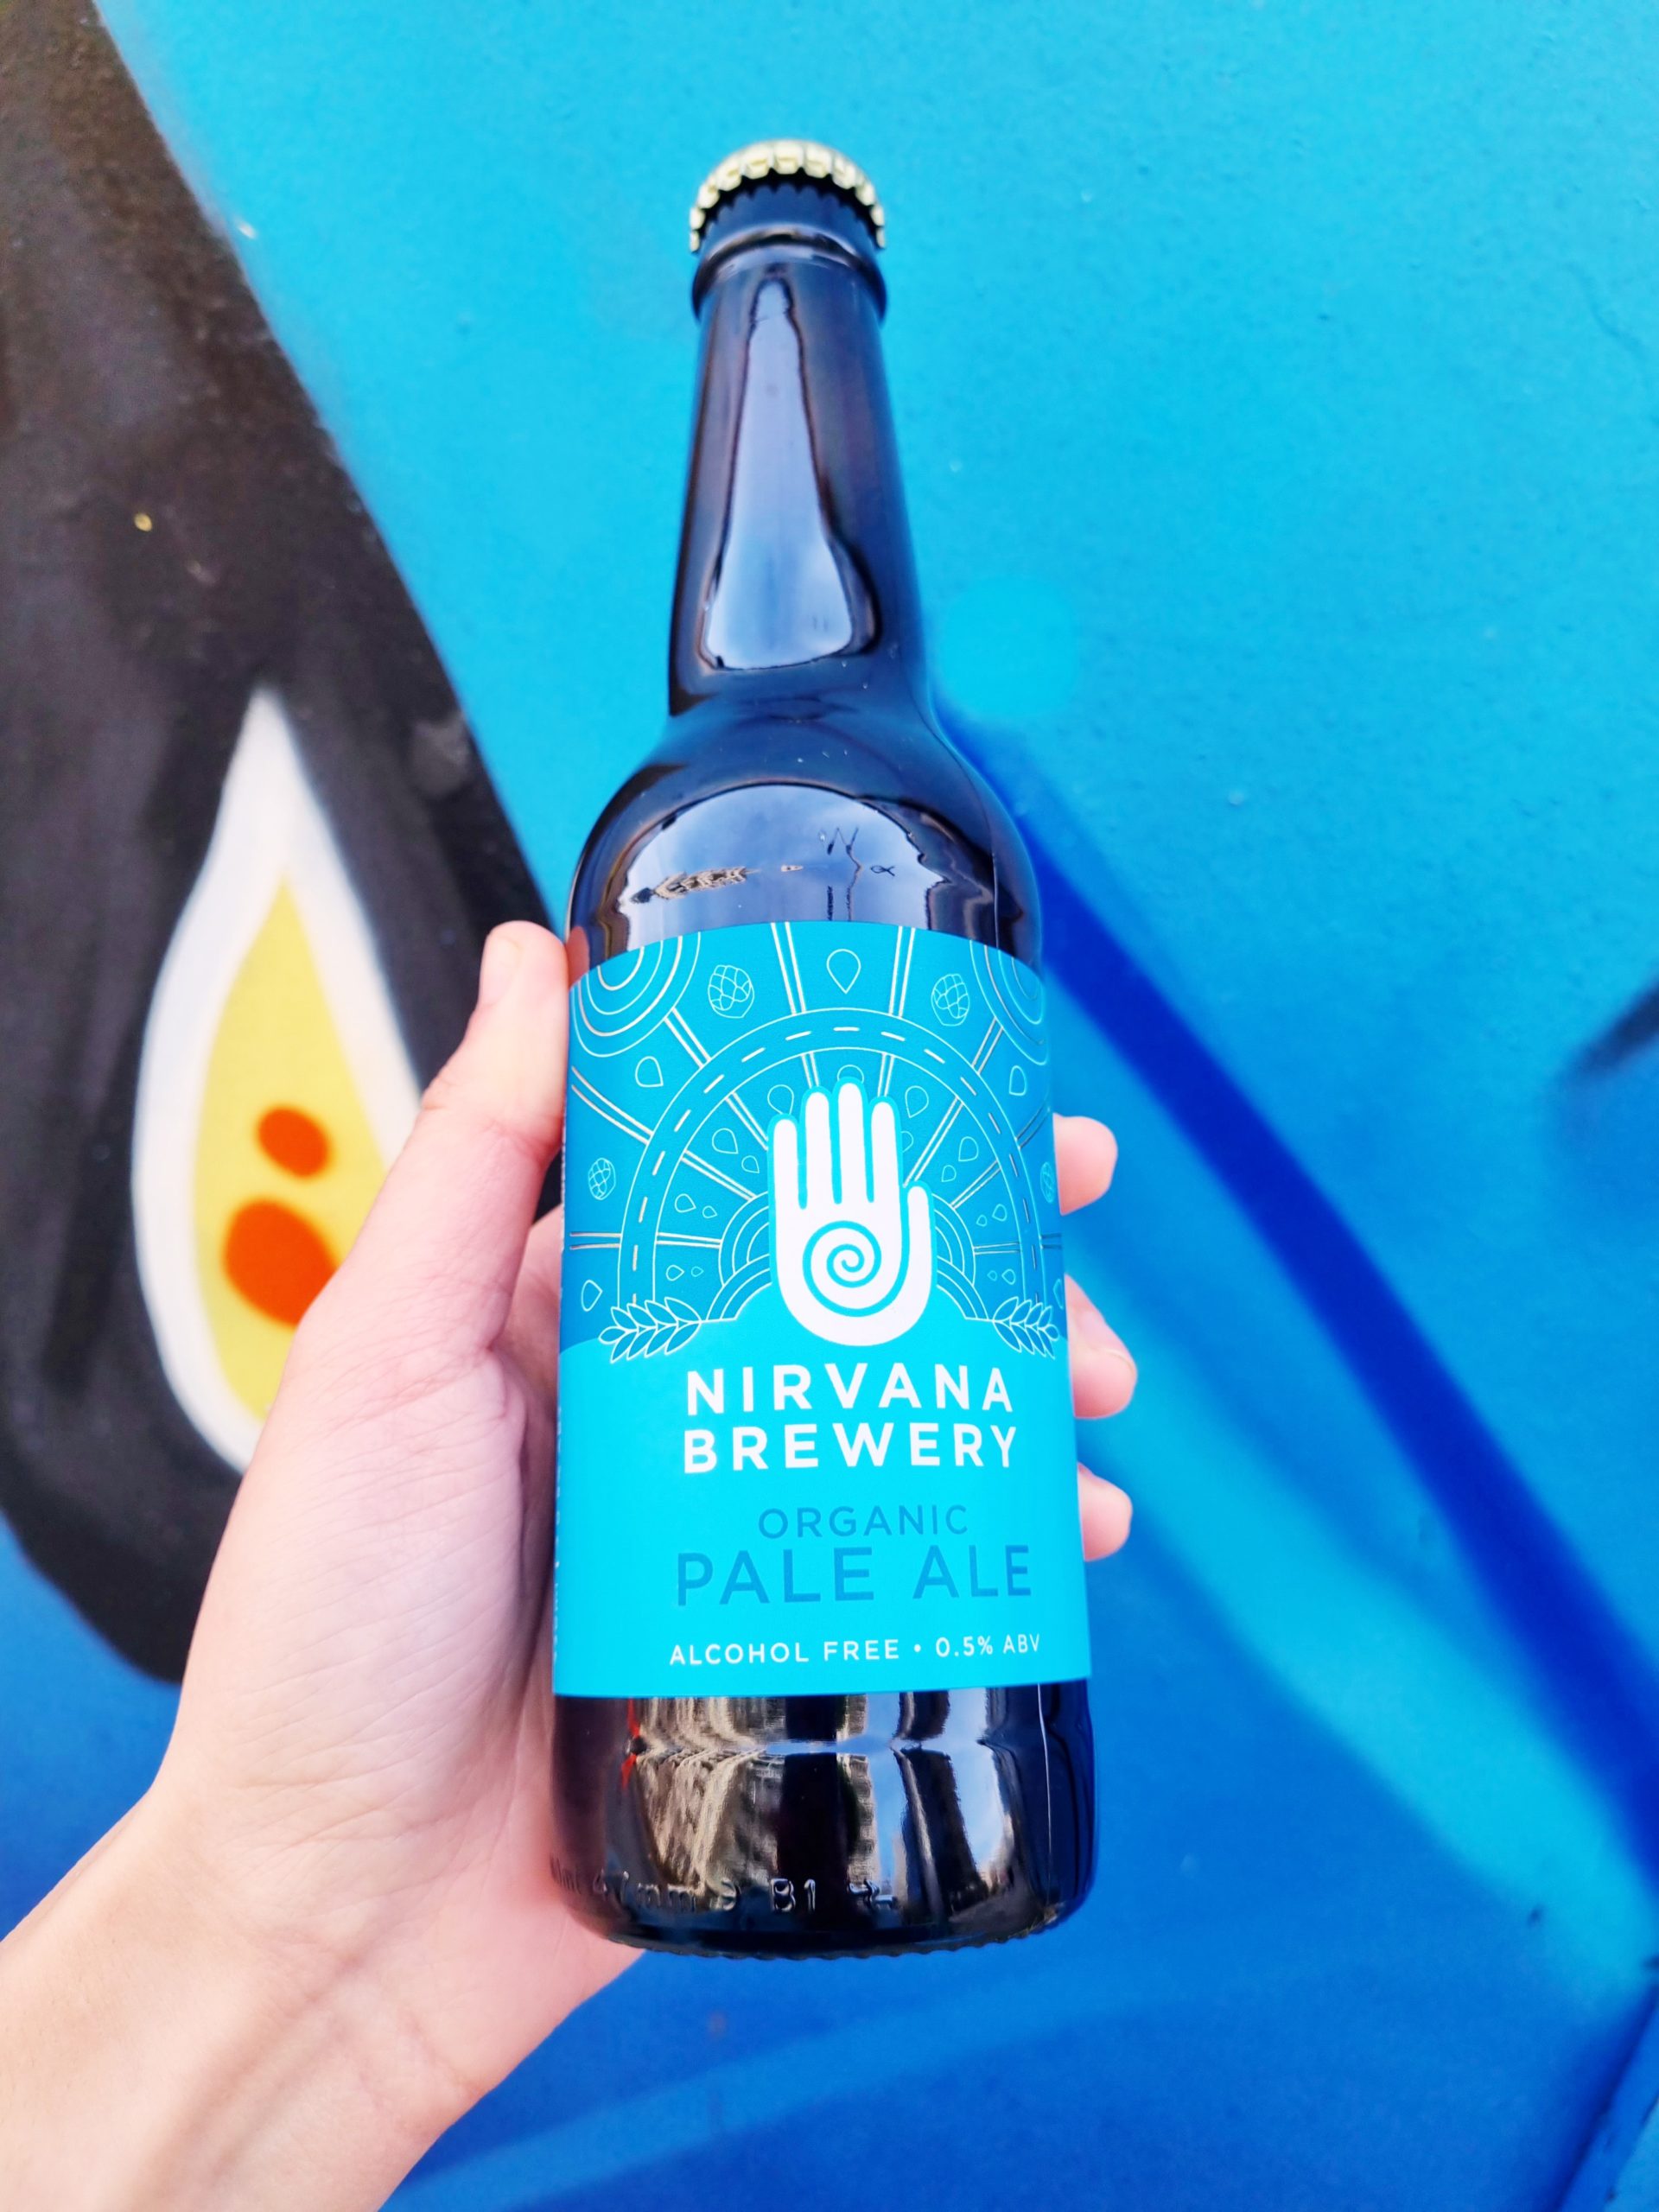 <img src="nirvana.jpg" alt="nirvana brewery organic ale "/> 